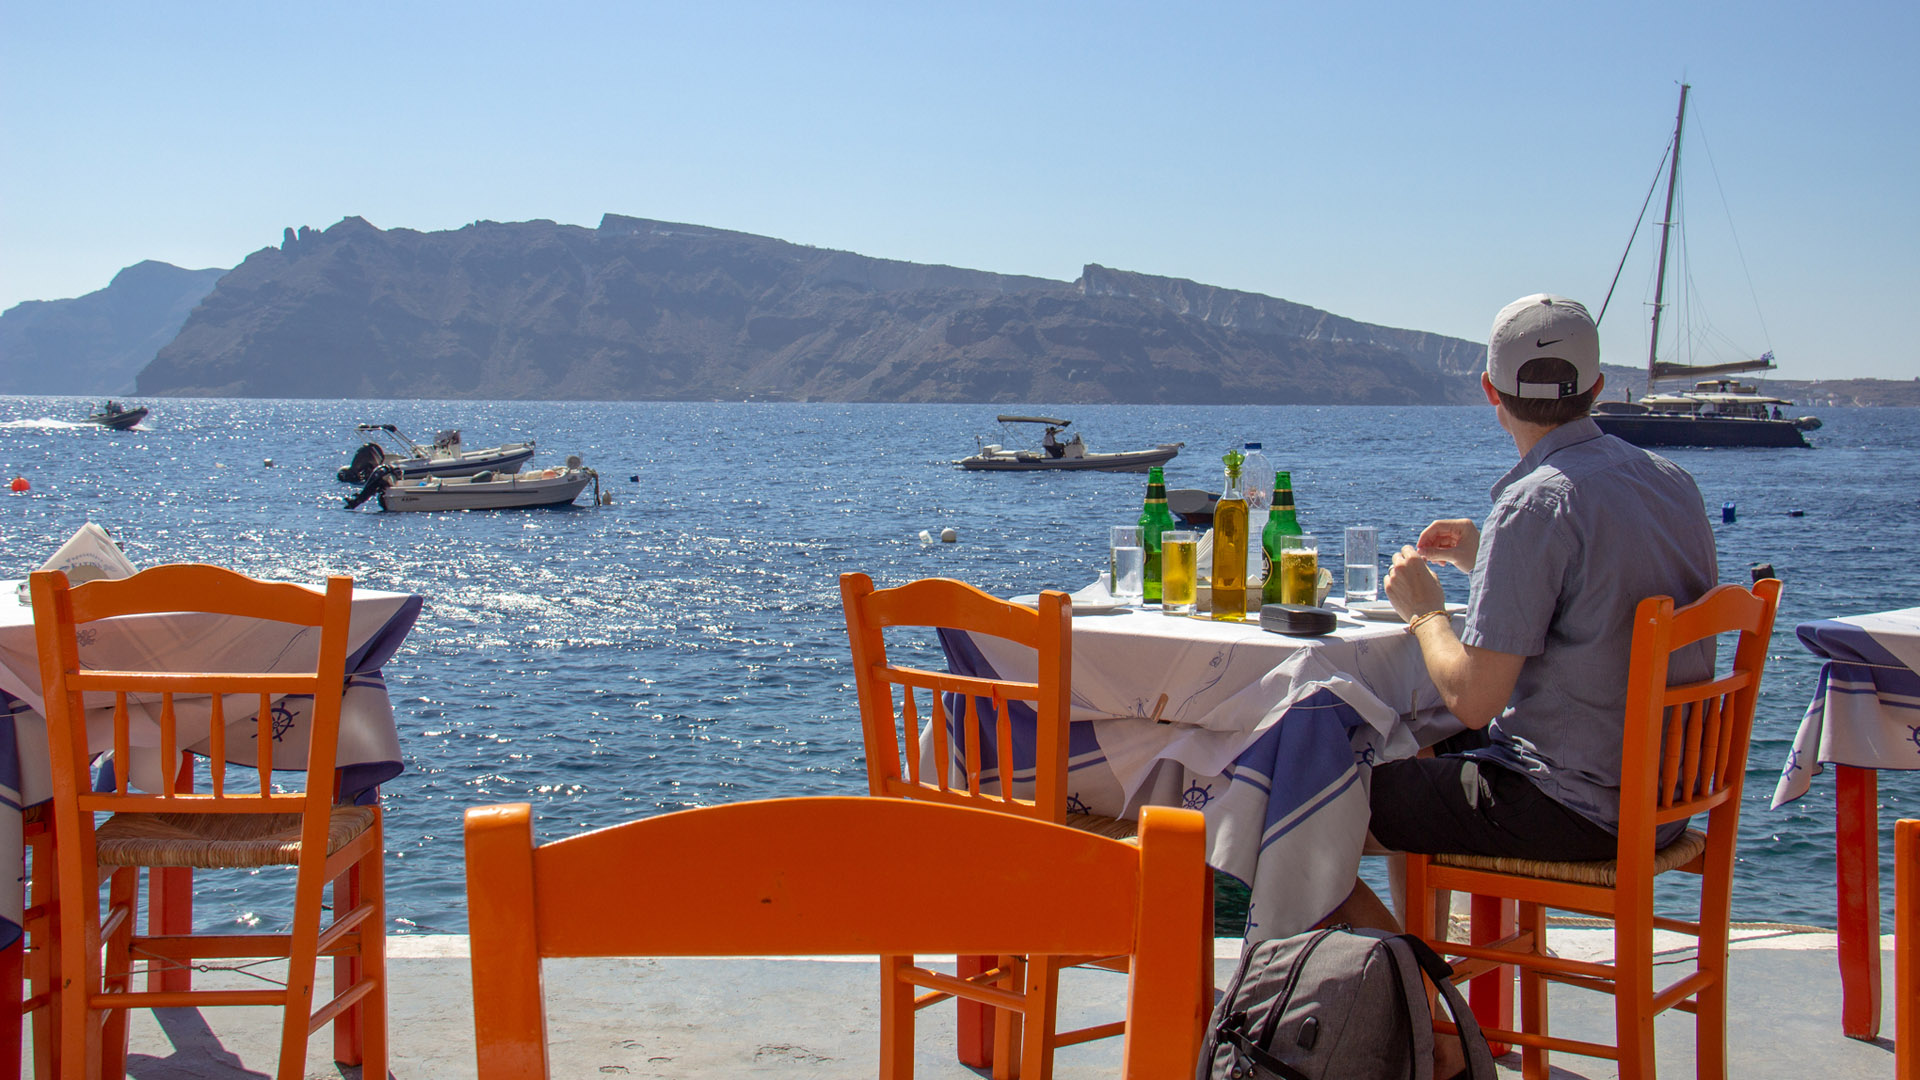 Onde comer em Santorini